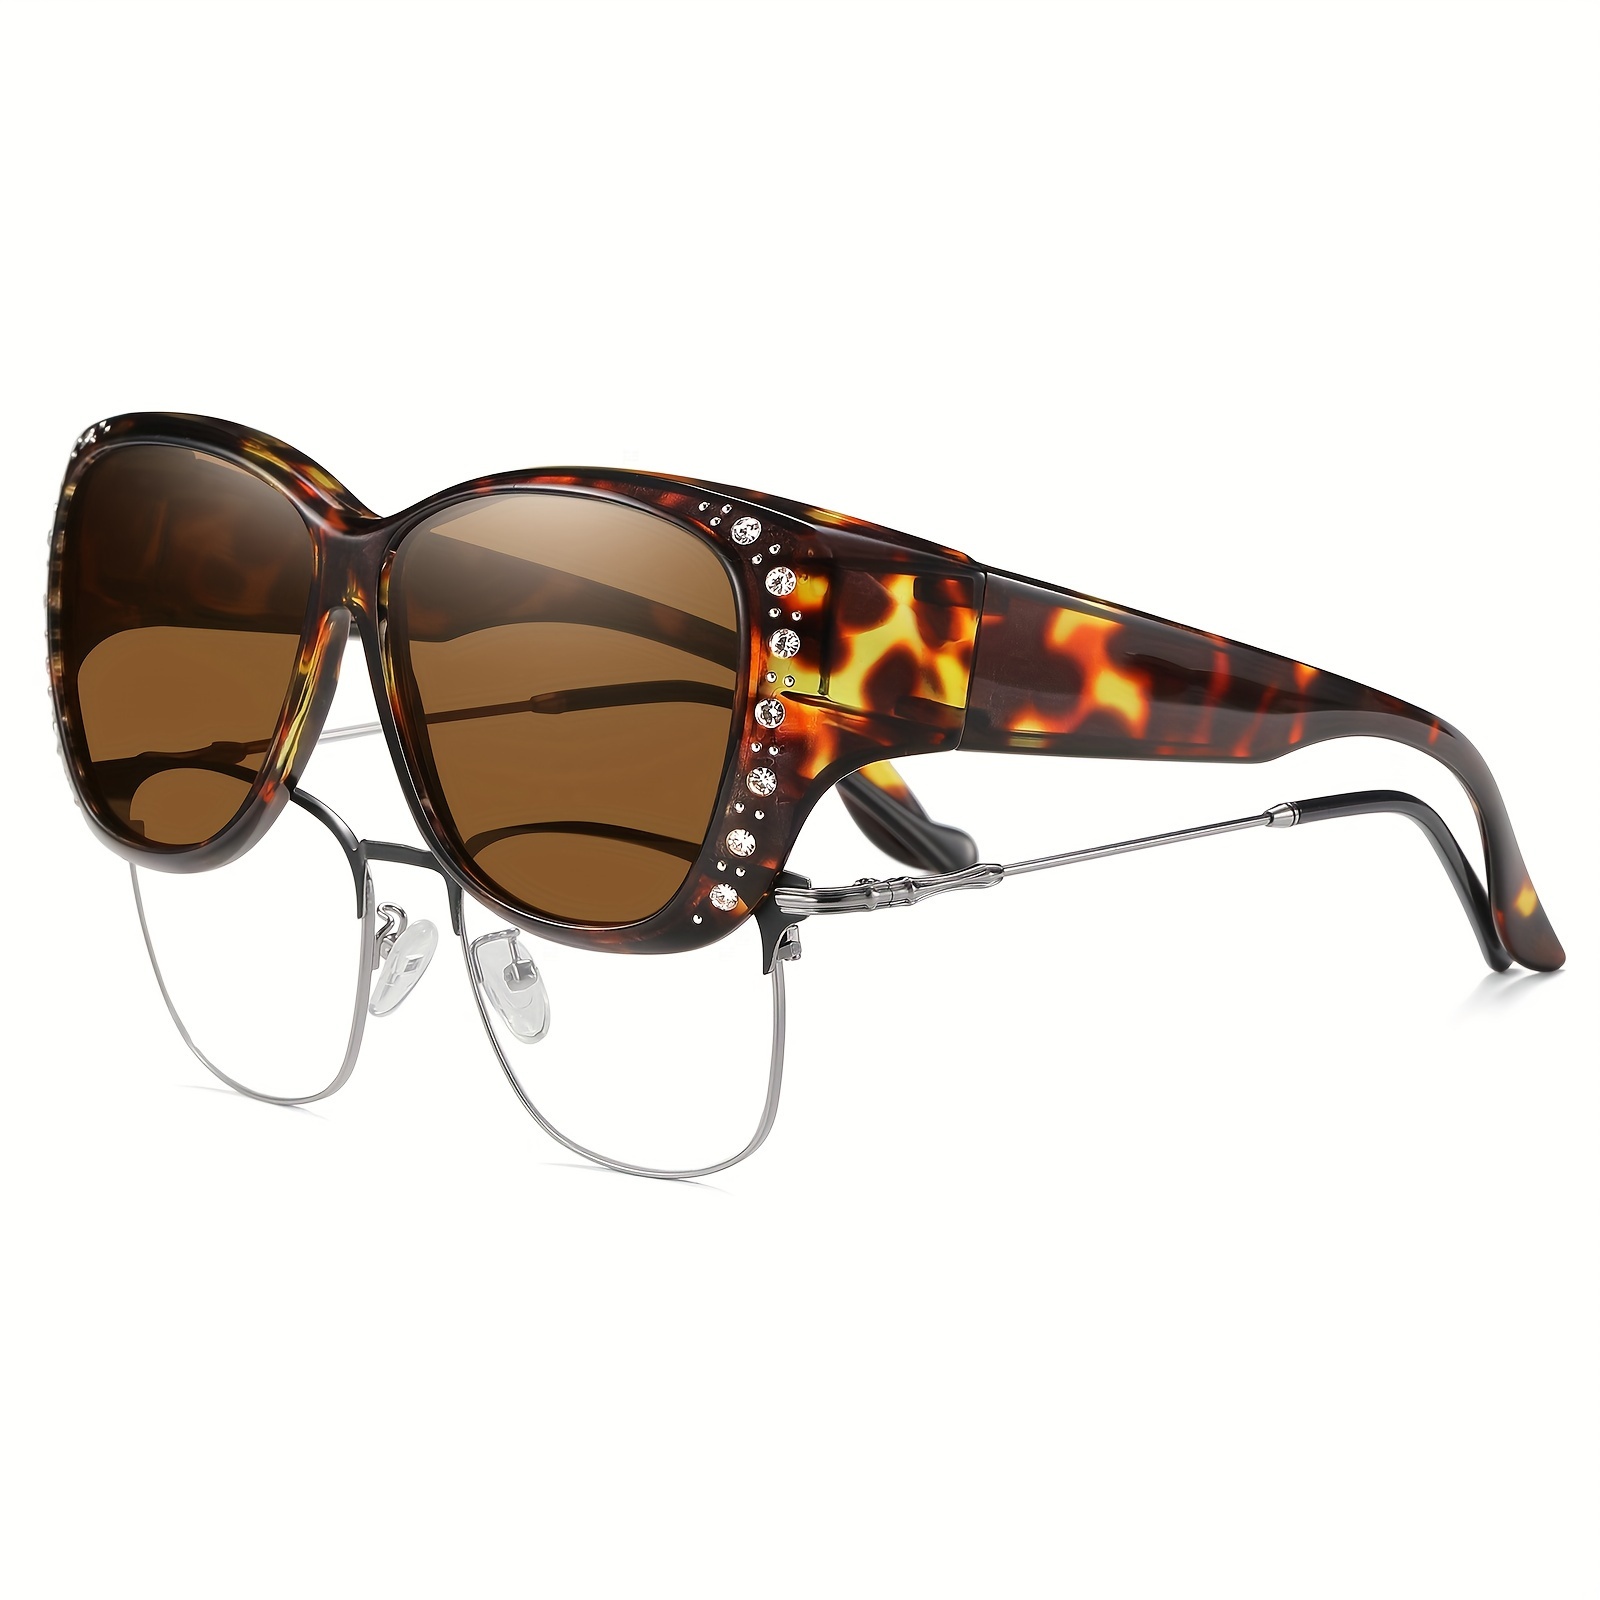 

Fashionable Glasses Designed Polarized Lens Fit Over Glasses For Both Women And Men Leopard Frame